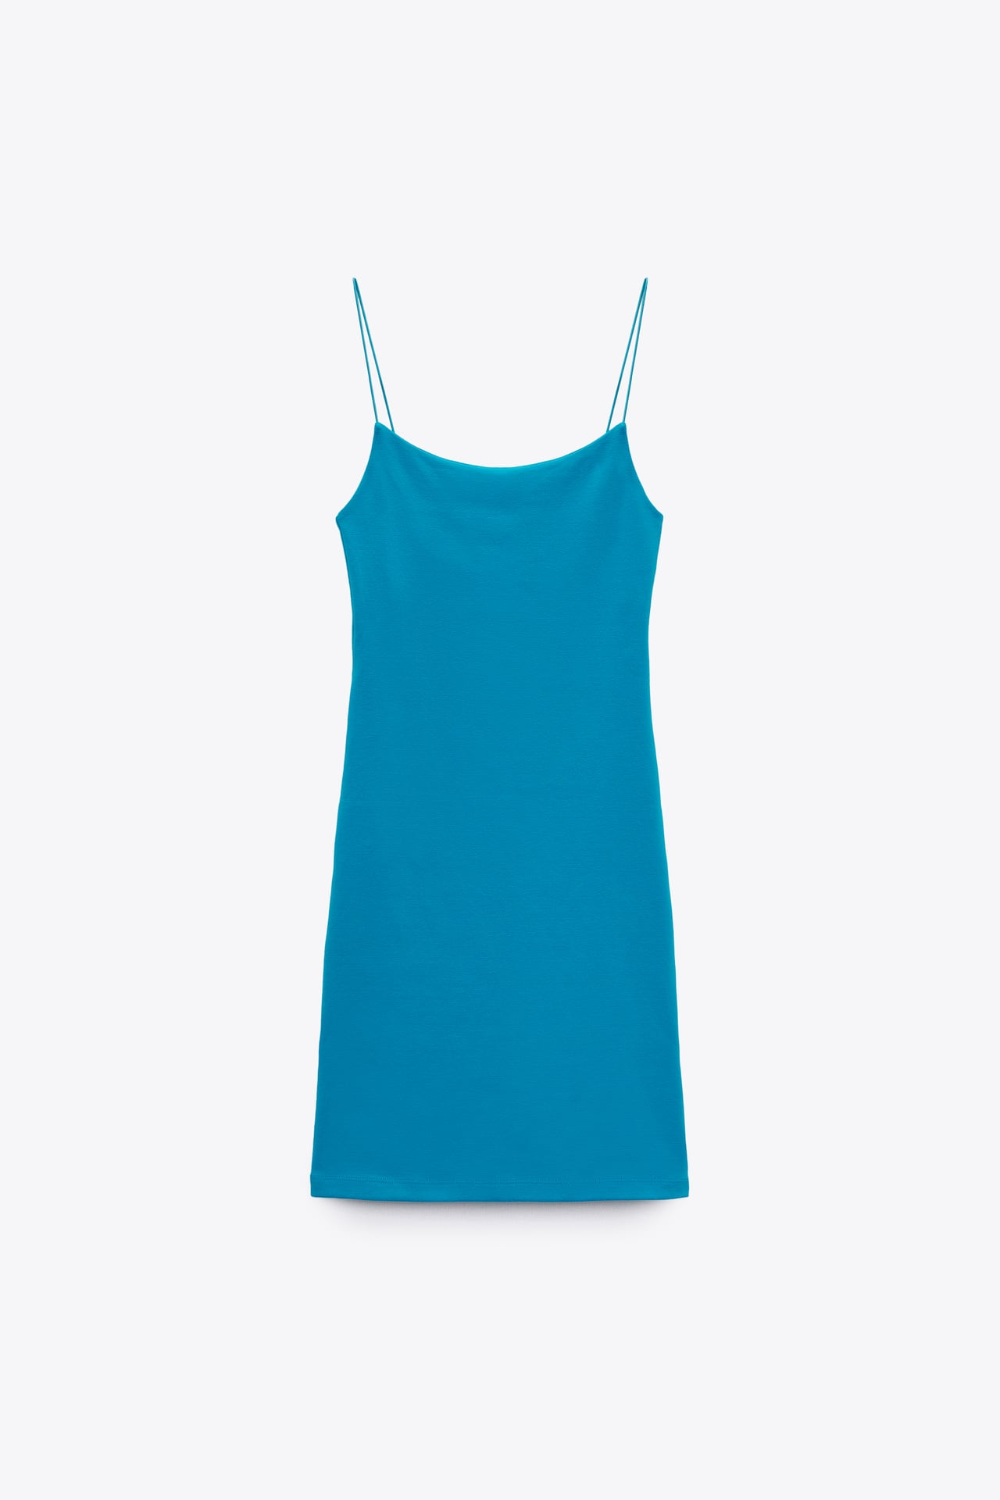 https://flyfiercefab.com/wp-content/uploads/2022/05/Zara-Blue-Basic-Fitted-Dress.png